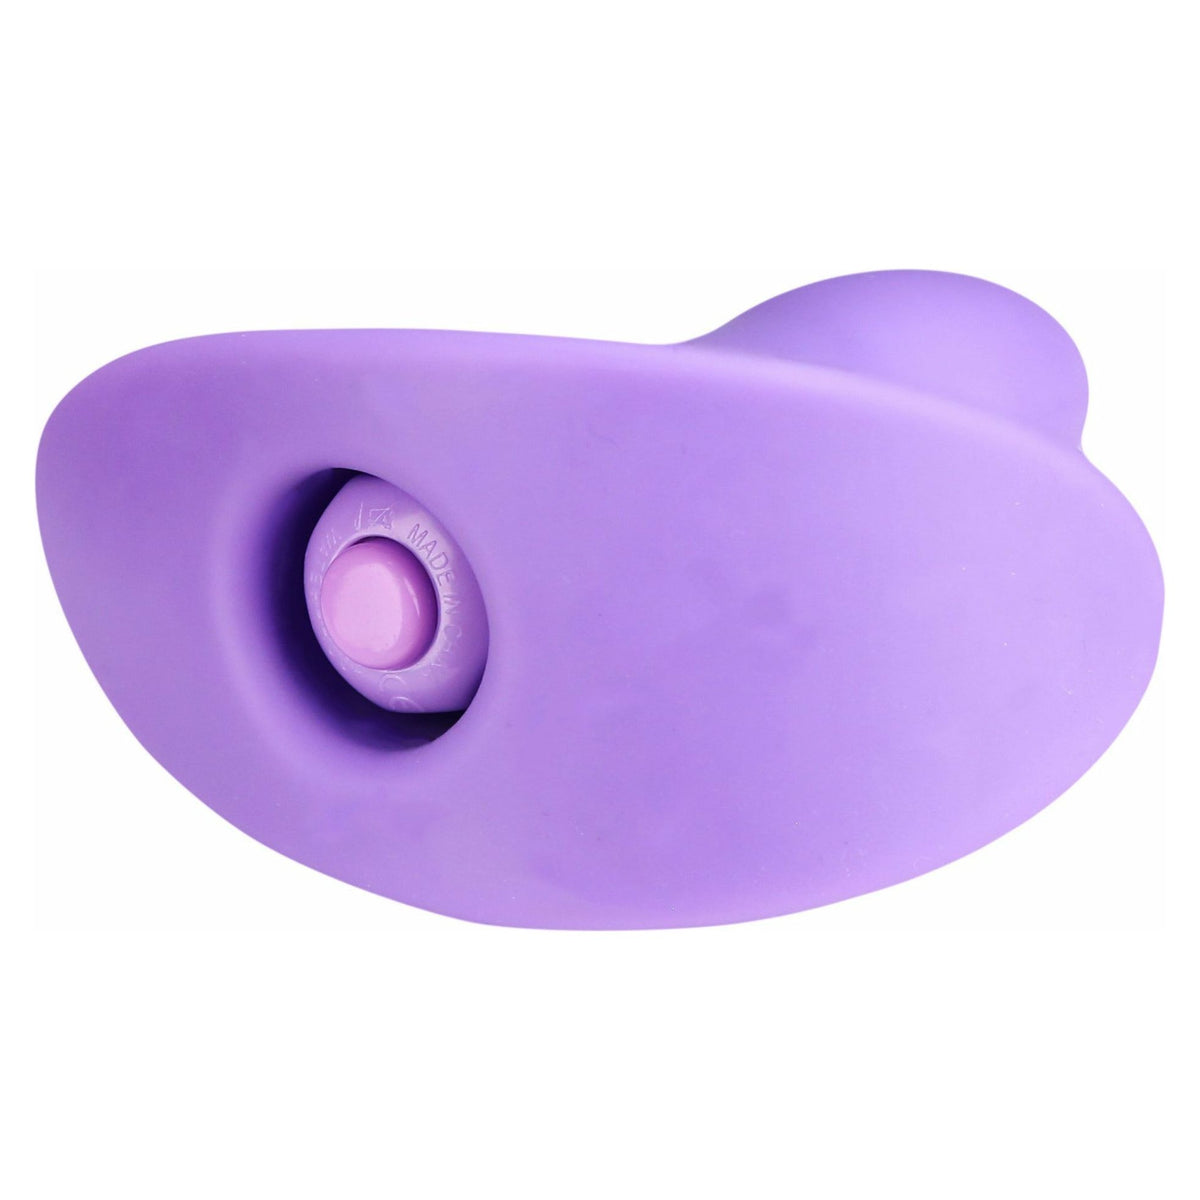 NMC Mystery High - Vibrating Butt Plug - Purple